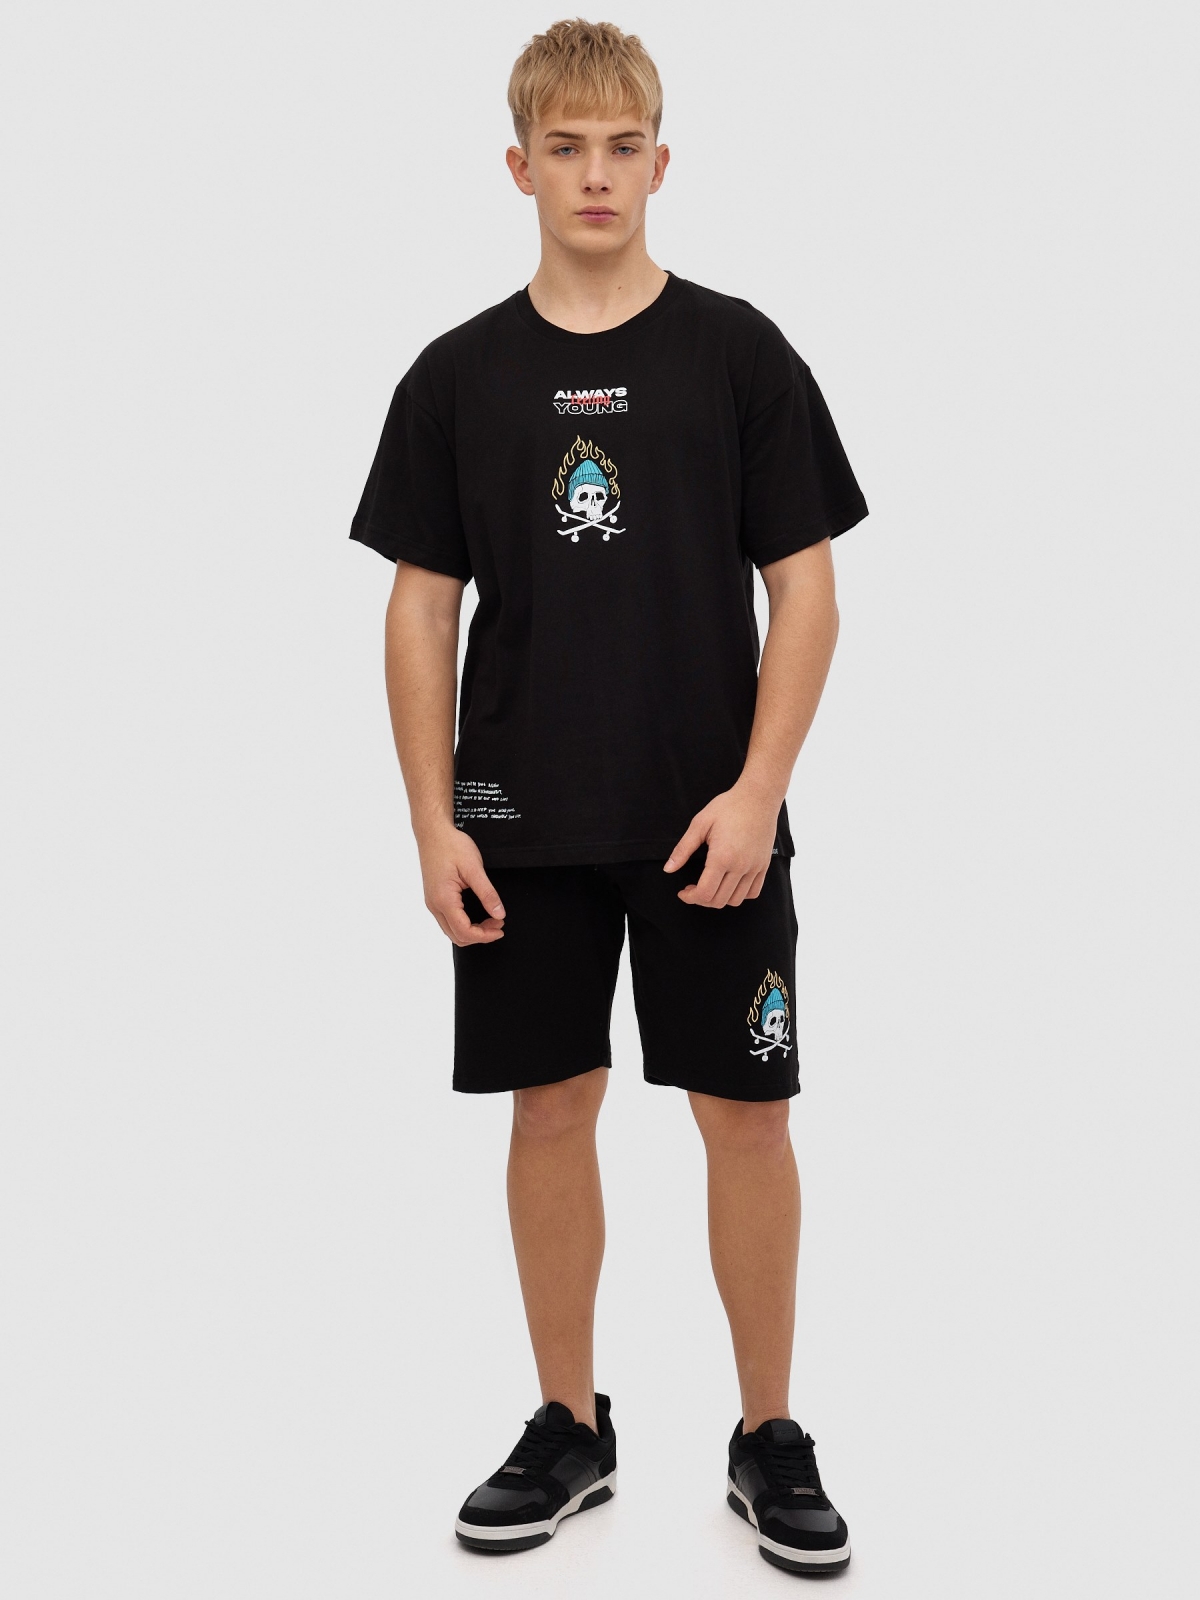 Camiseta calavera skater negro vista general frontal